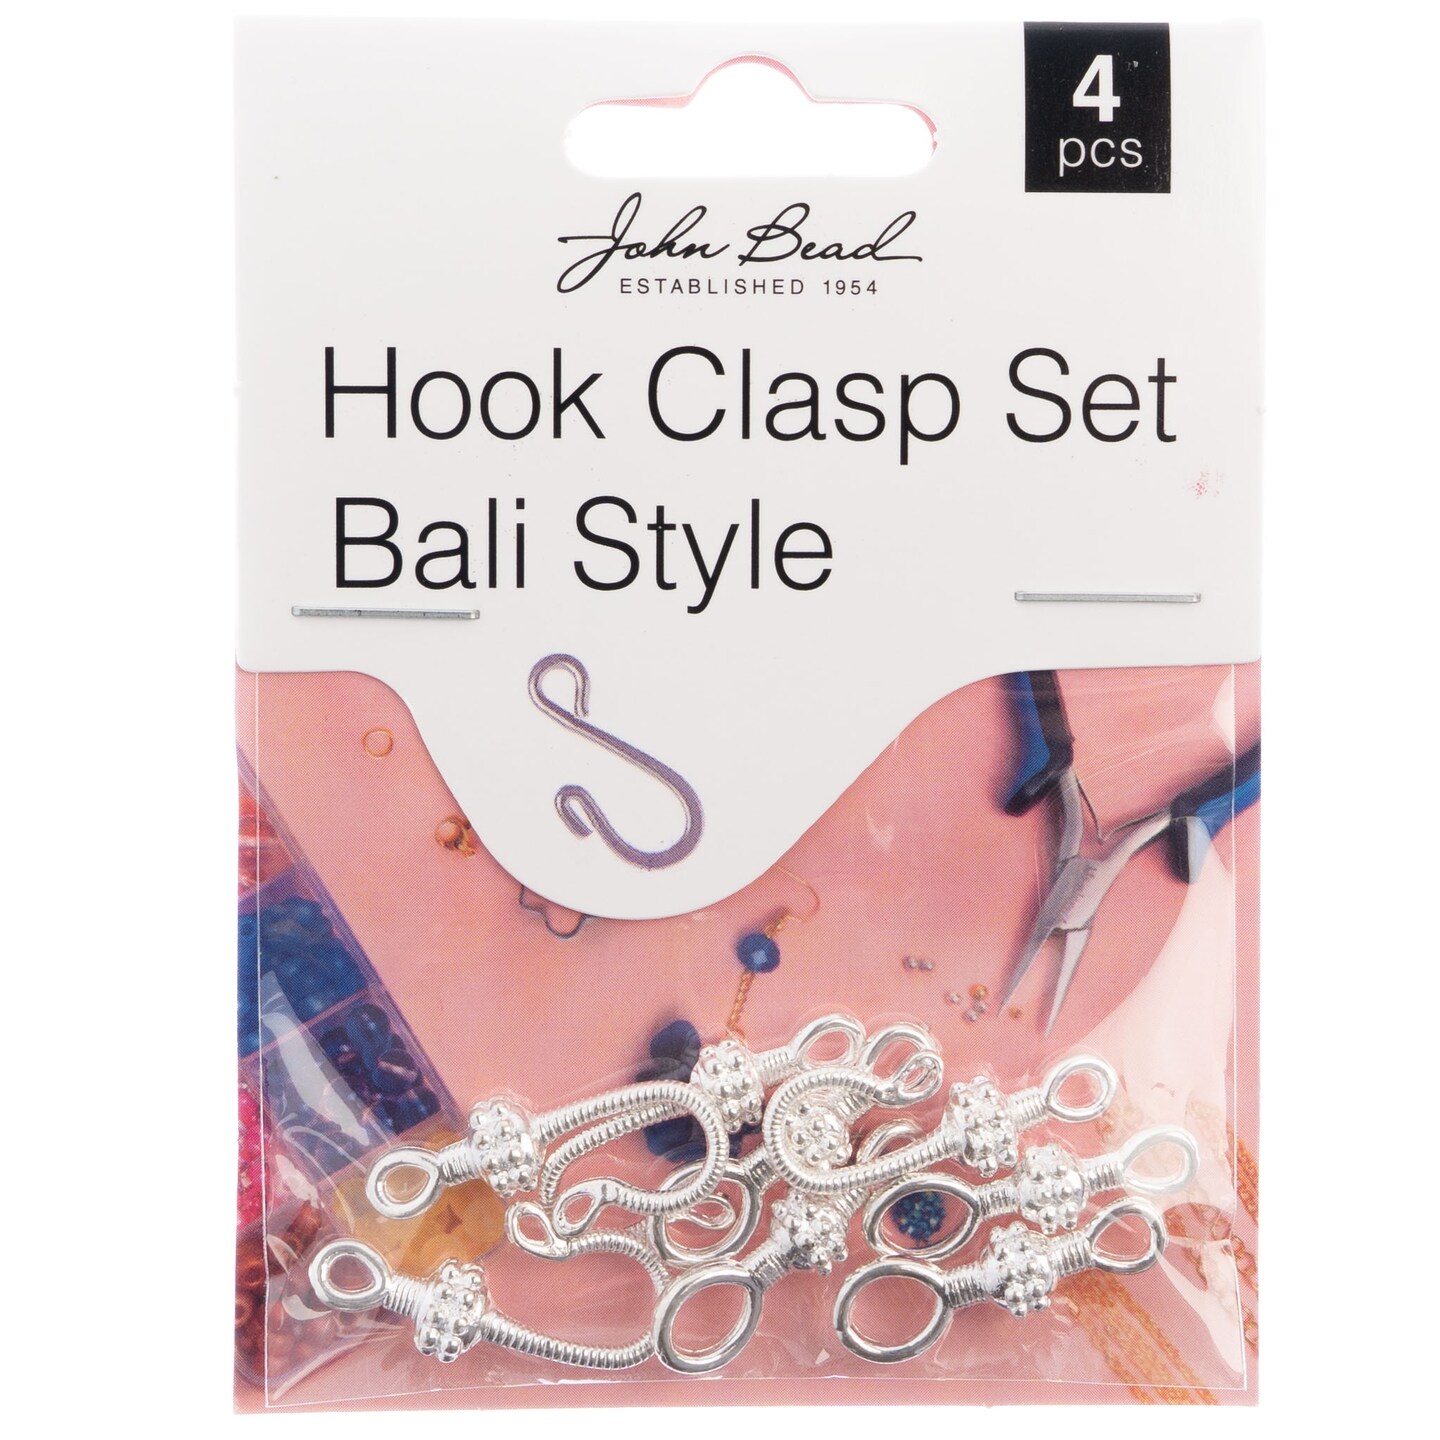 John Bead Bali Style Hook Clasp Set 25mm 4/Pkg-Silver